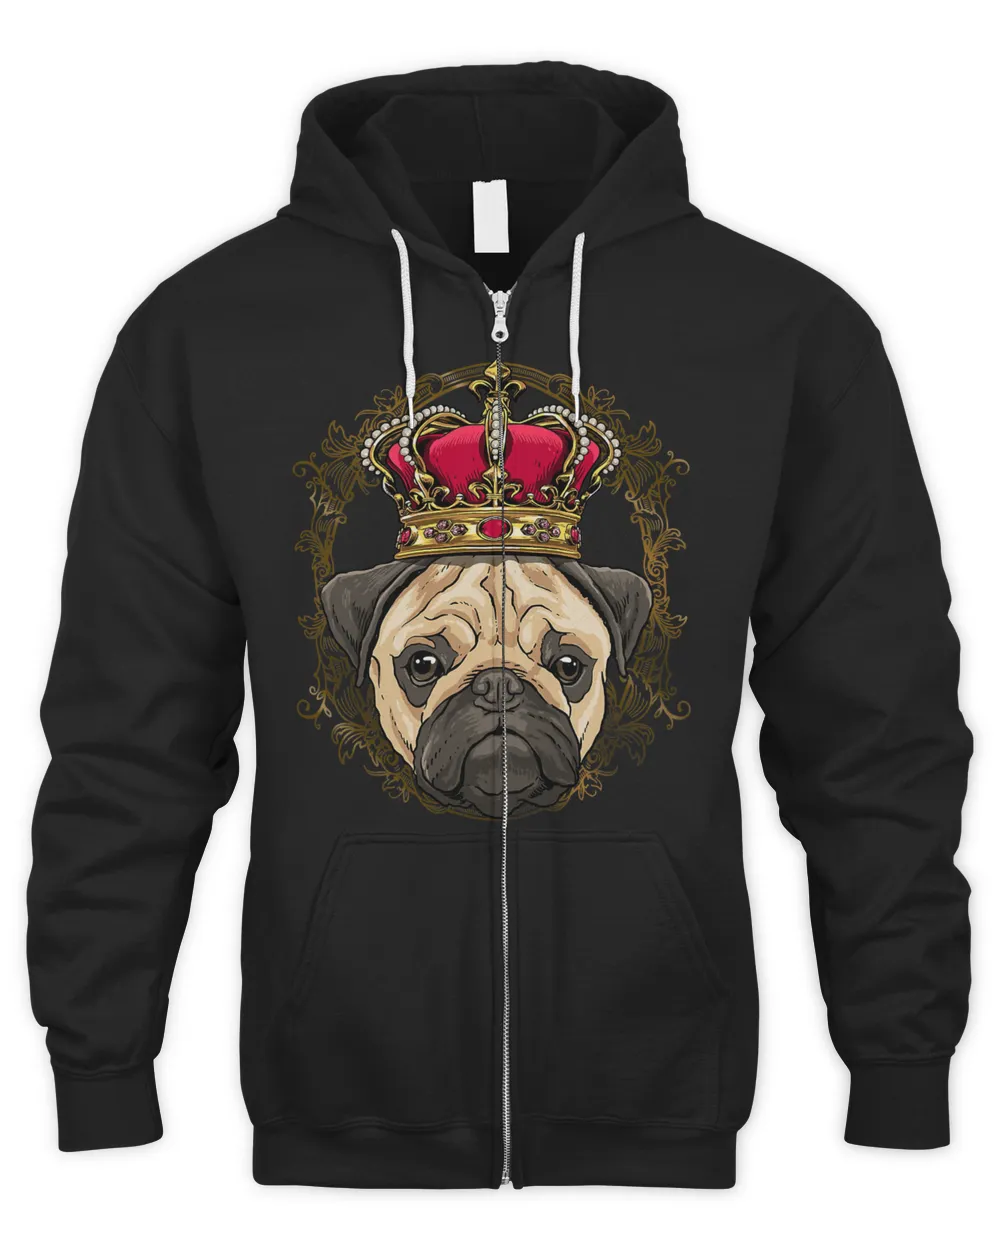 King Pug Wearing Crown - Queen Pug Dog T-Shirt